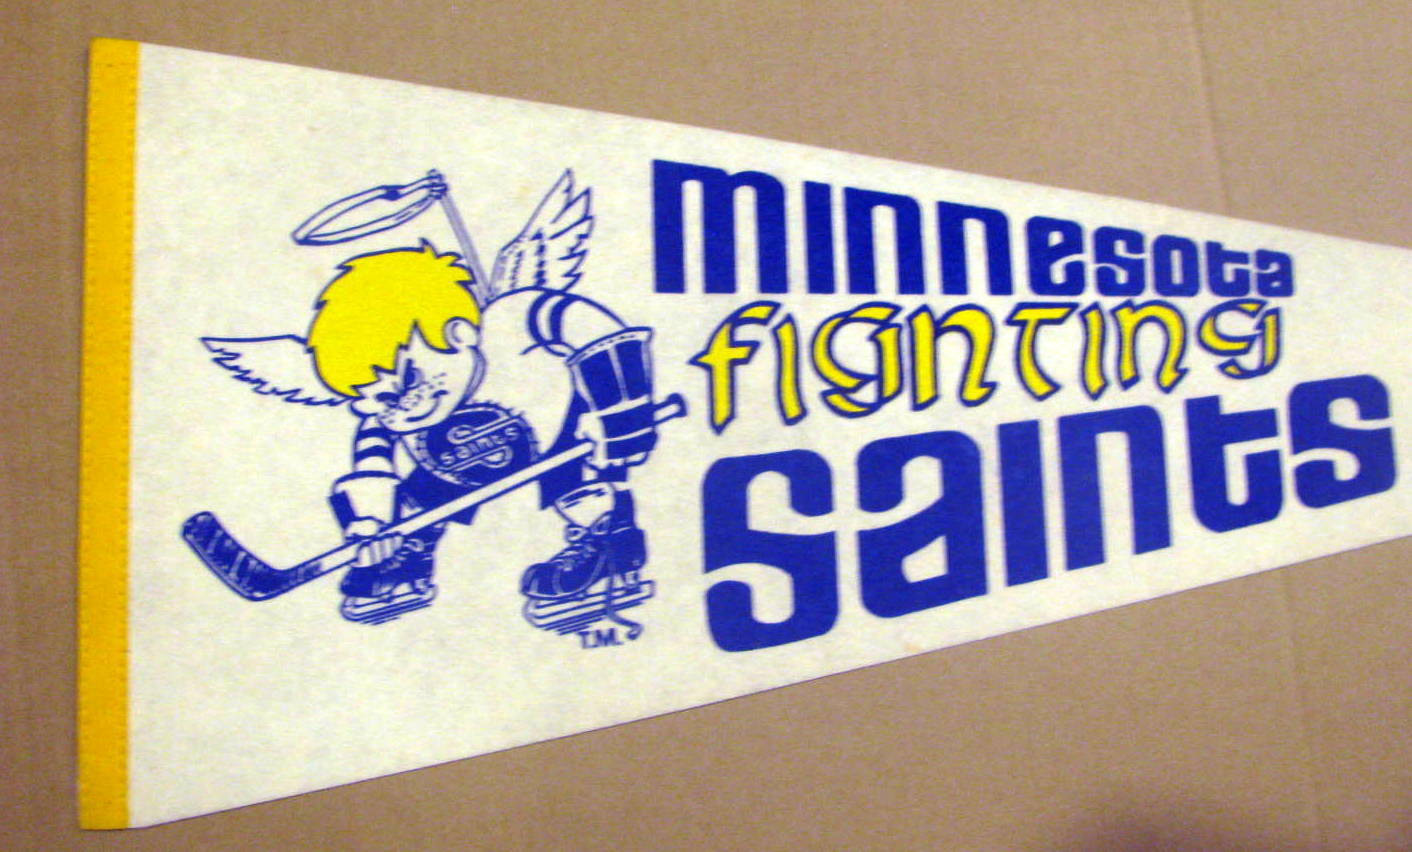 Minnesota Fighting Saints Posters for Sale